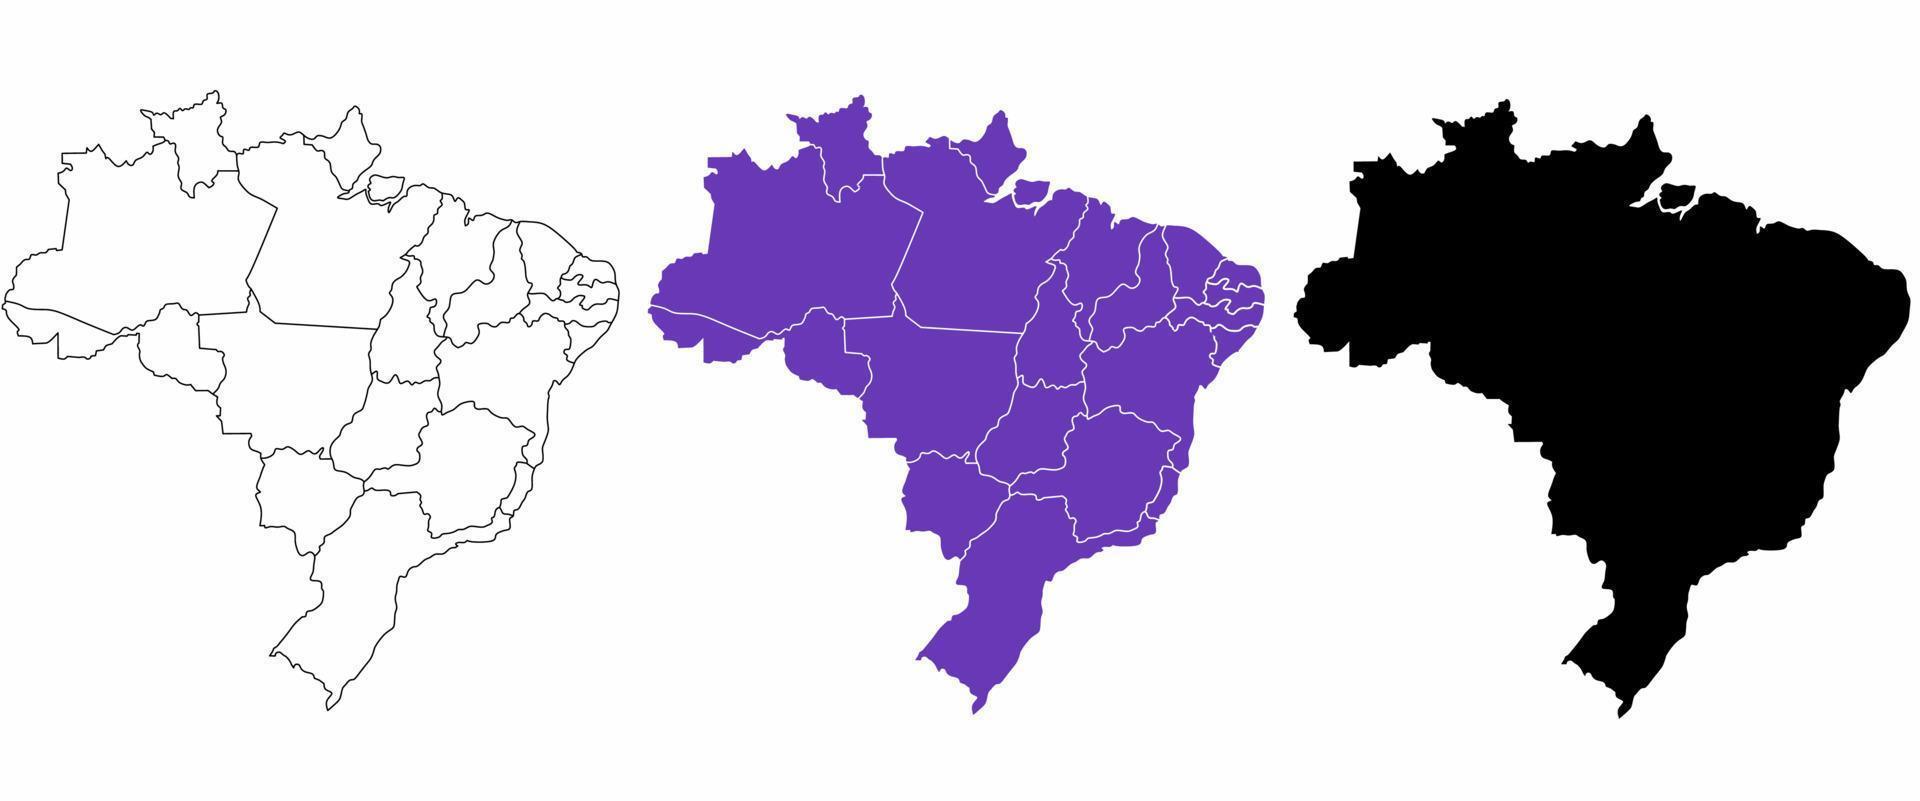 federativa republiken Brasilien politisk karta på vit bakgrund vektor